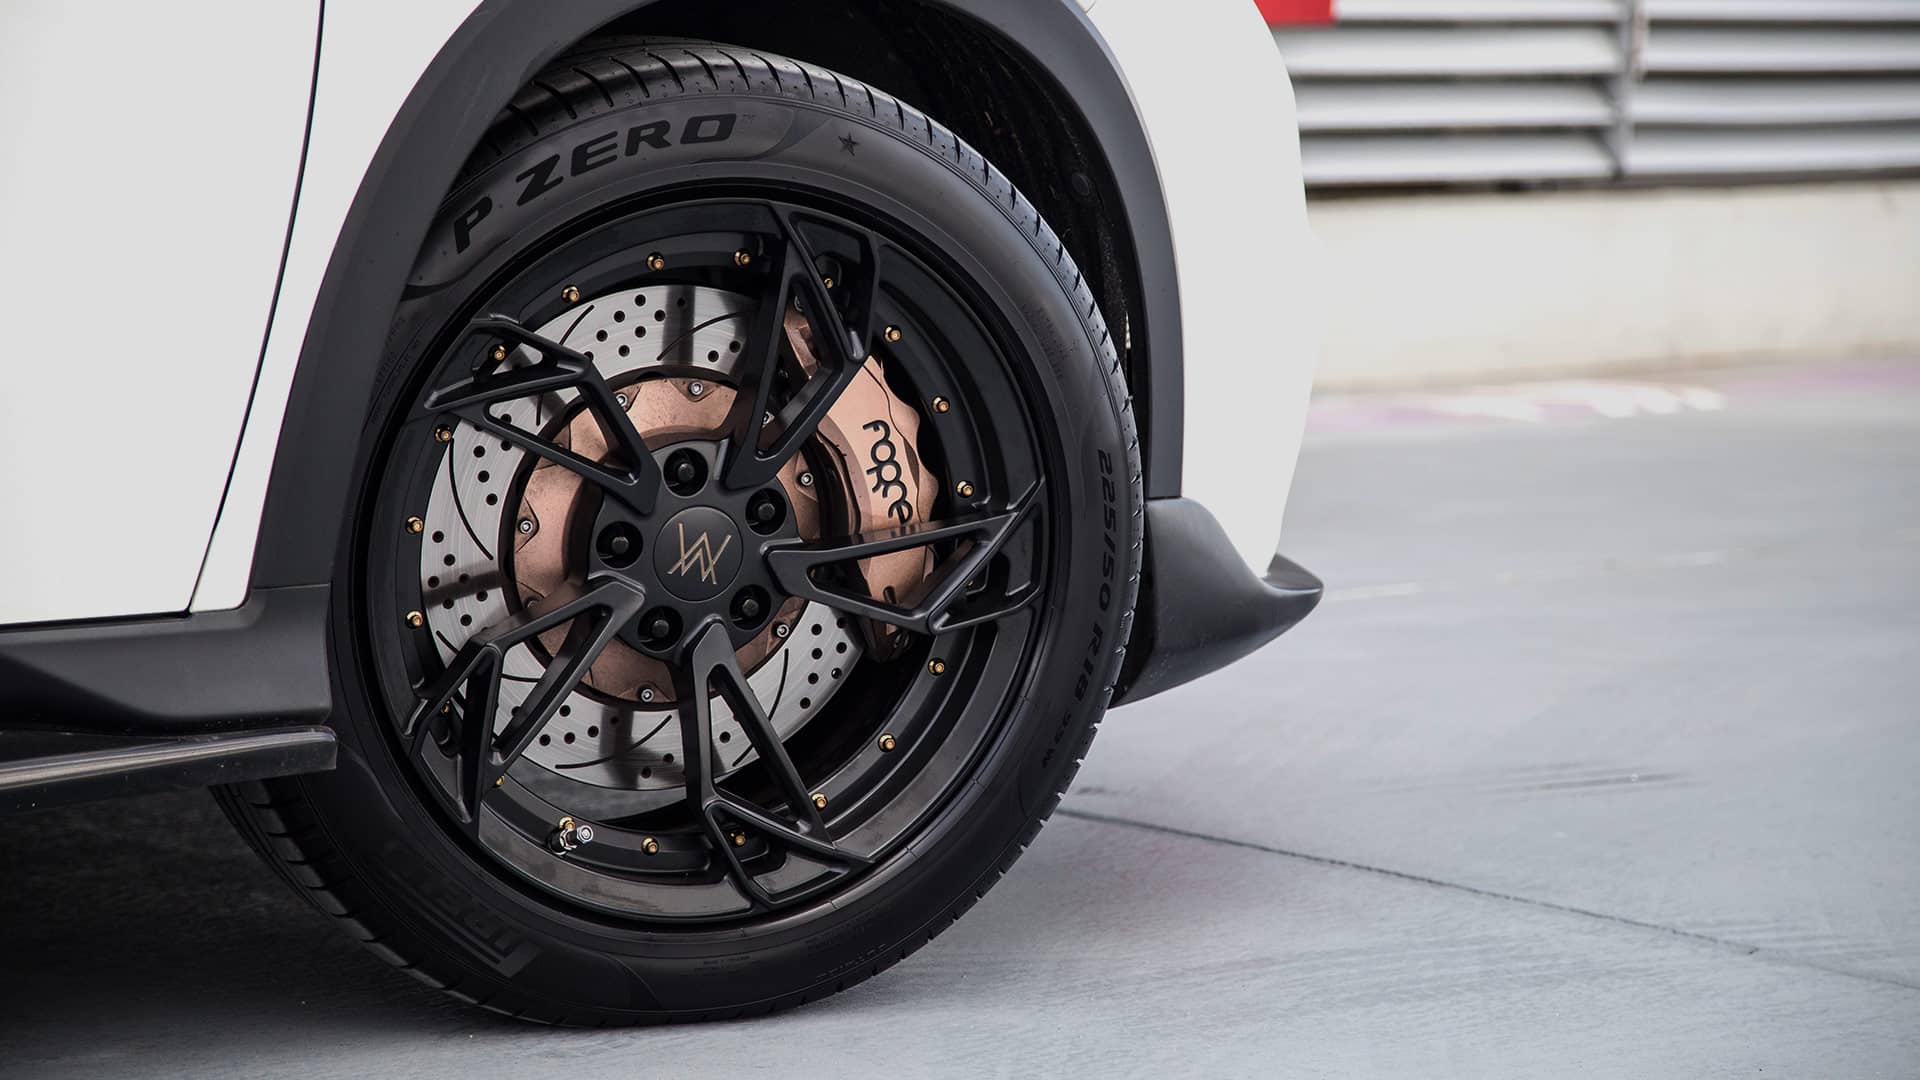 18 inch Custom Forged Wheel in satin black finish against a big brake kit